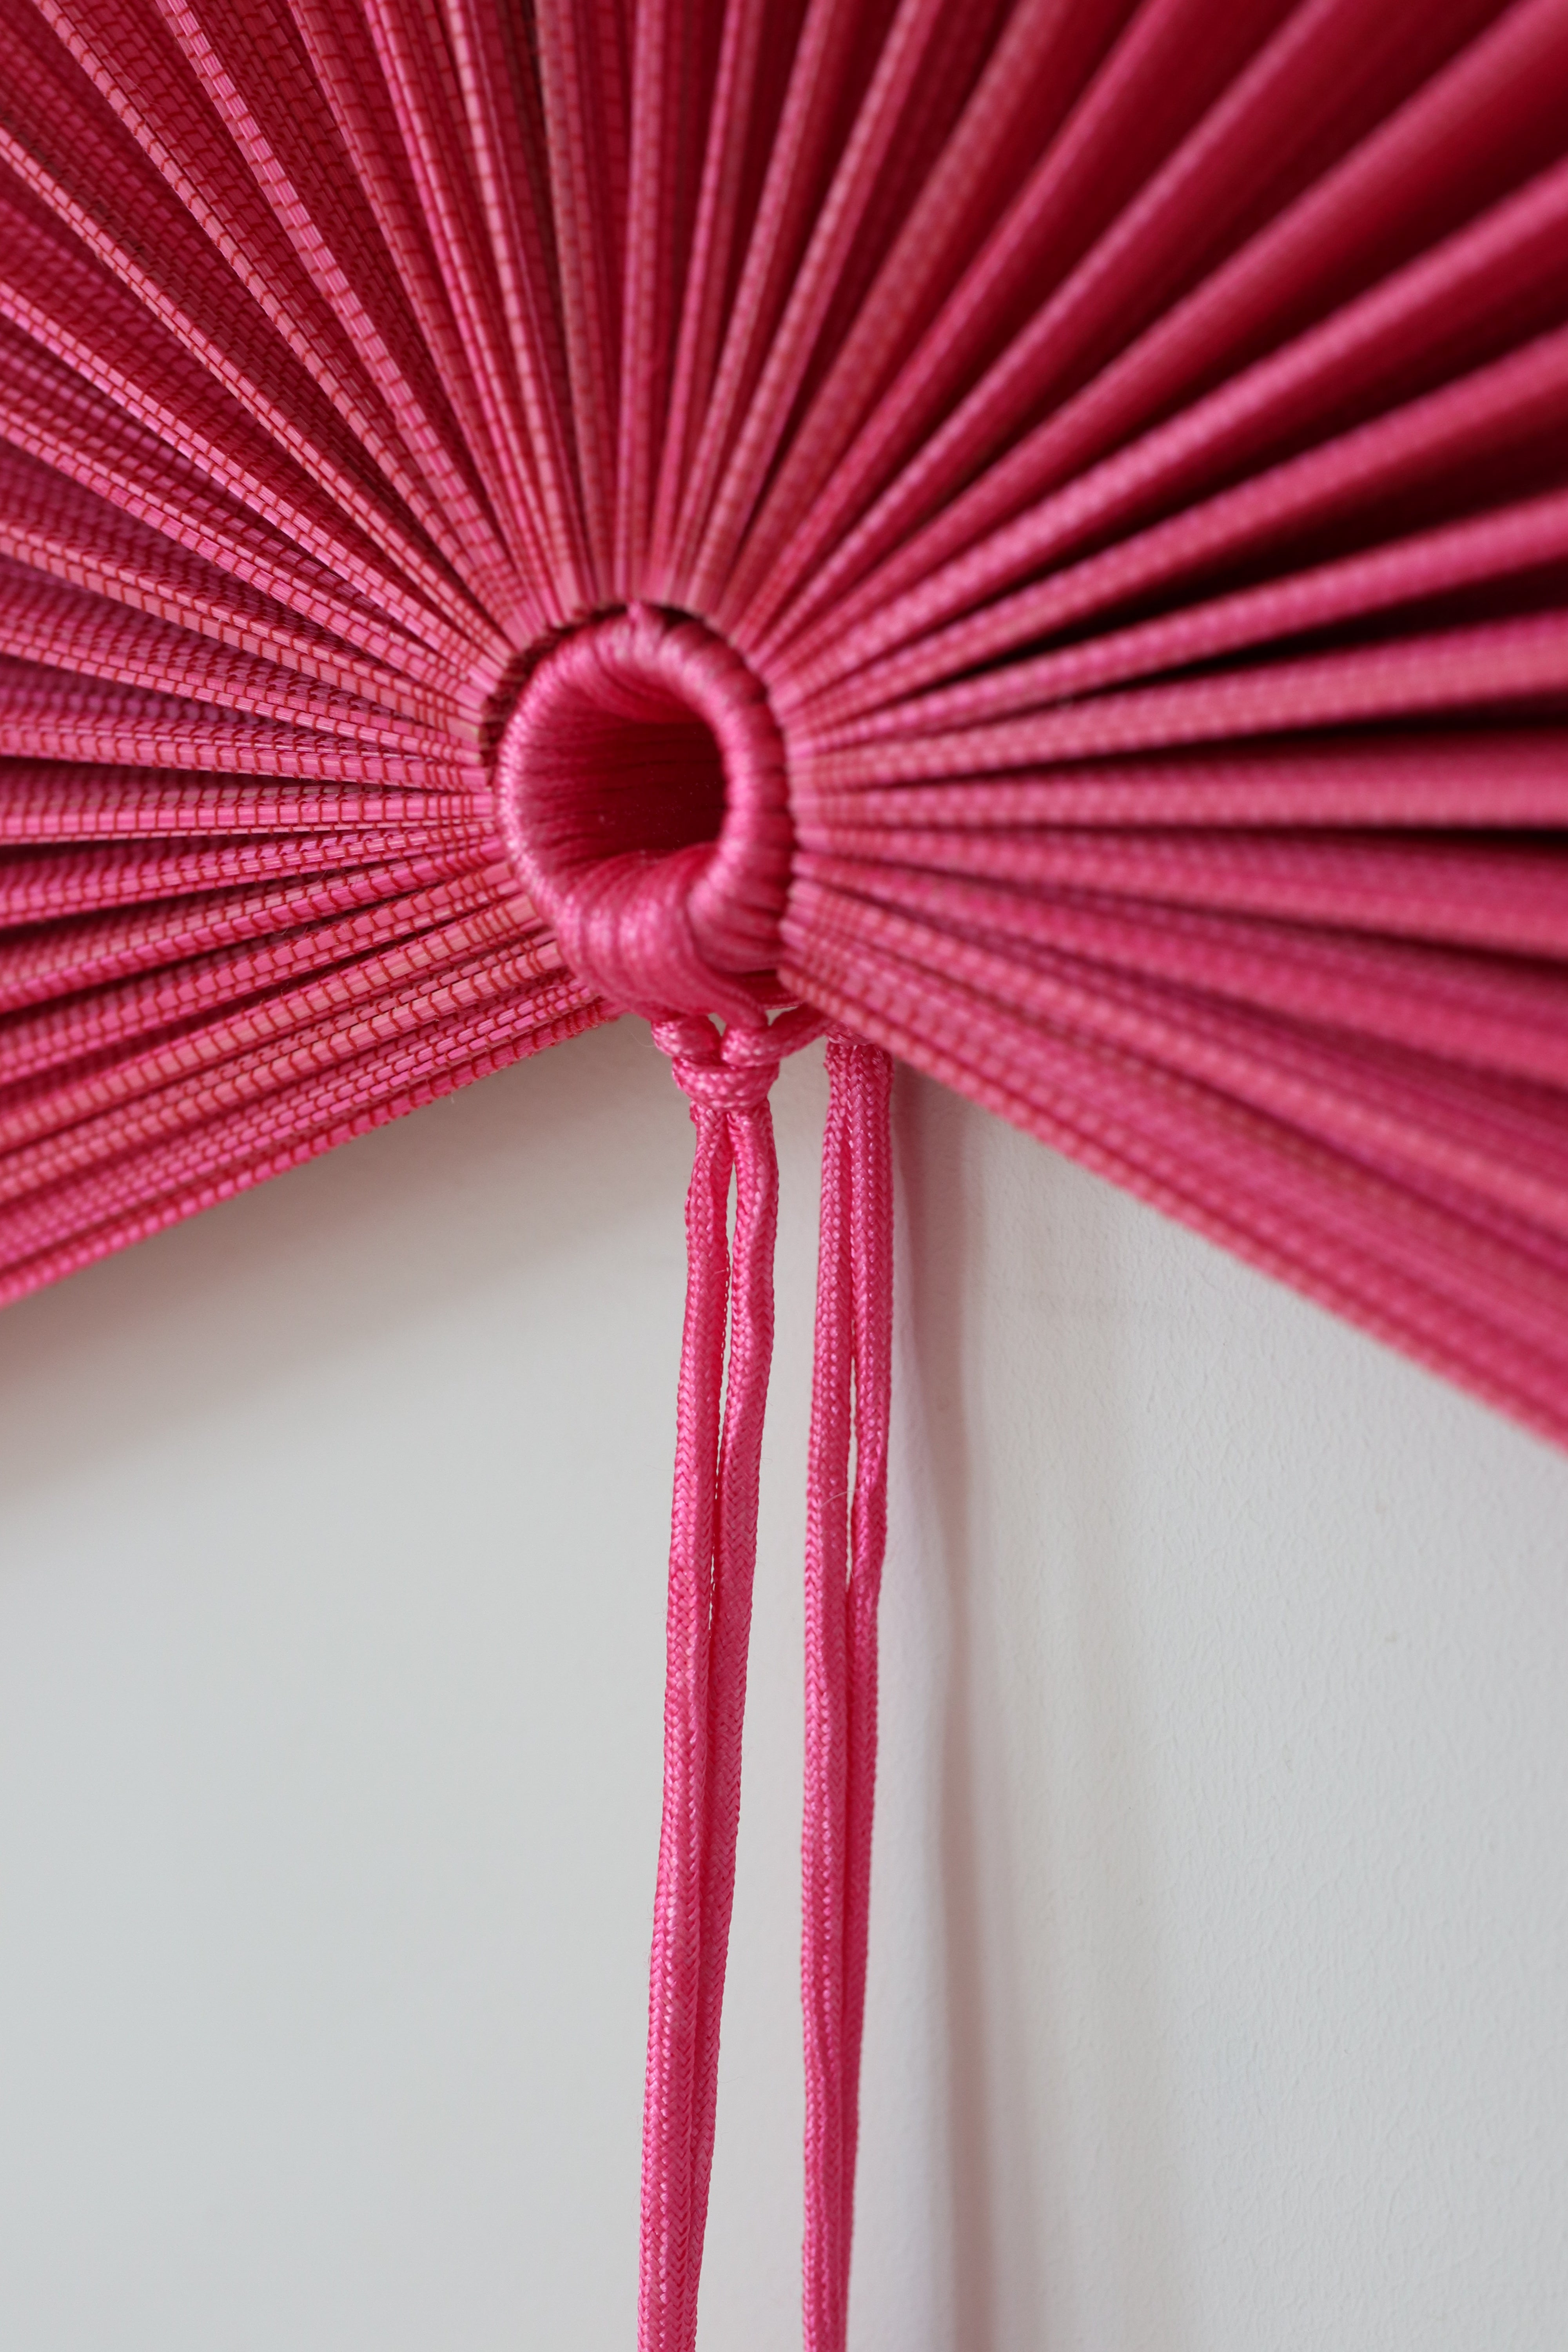 Bamboo fan pink